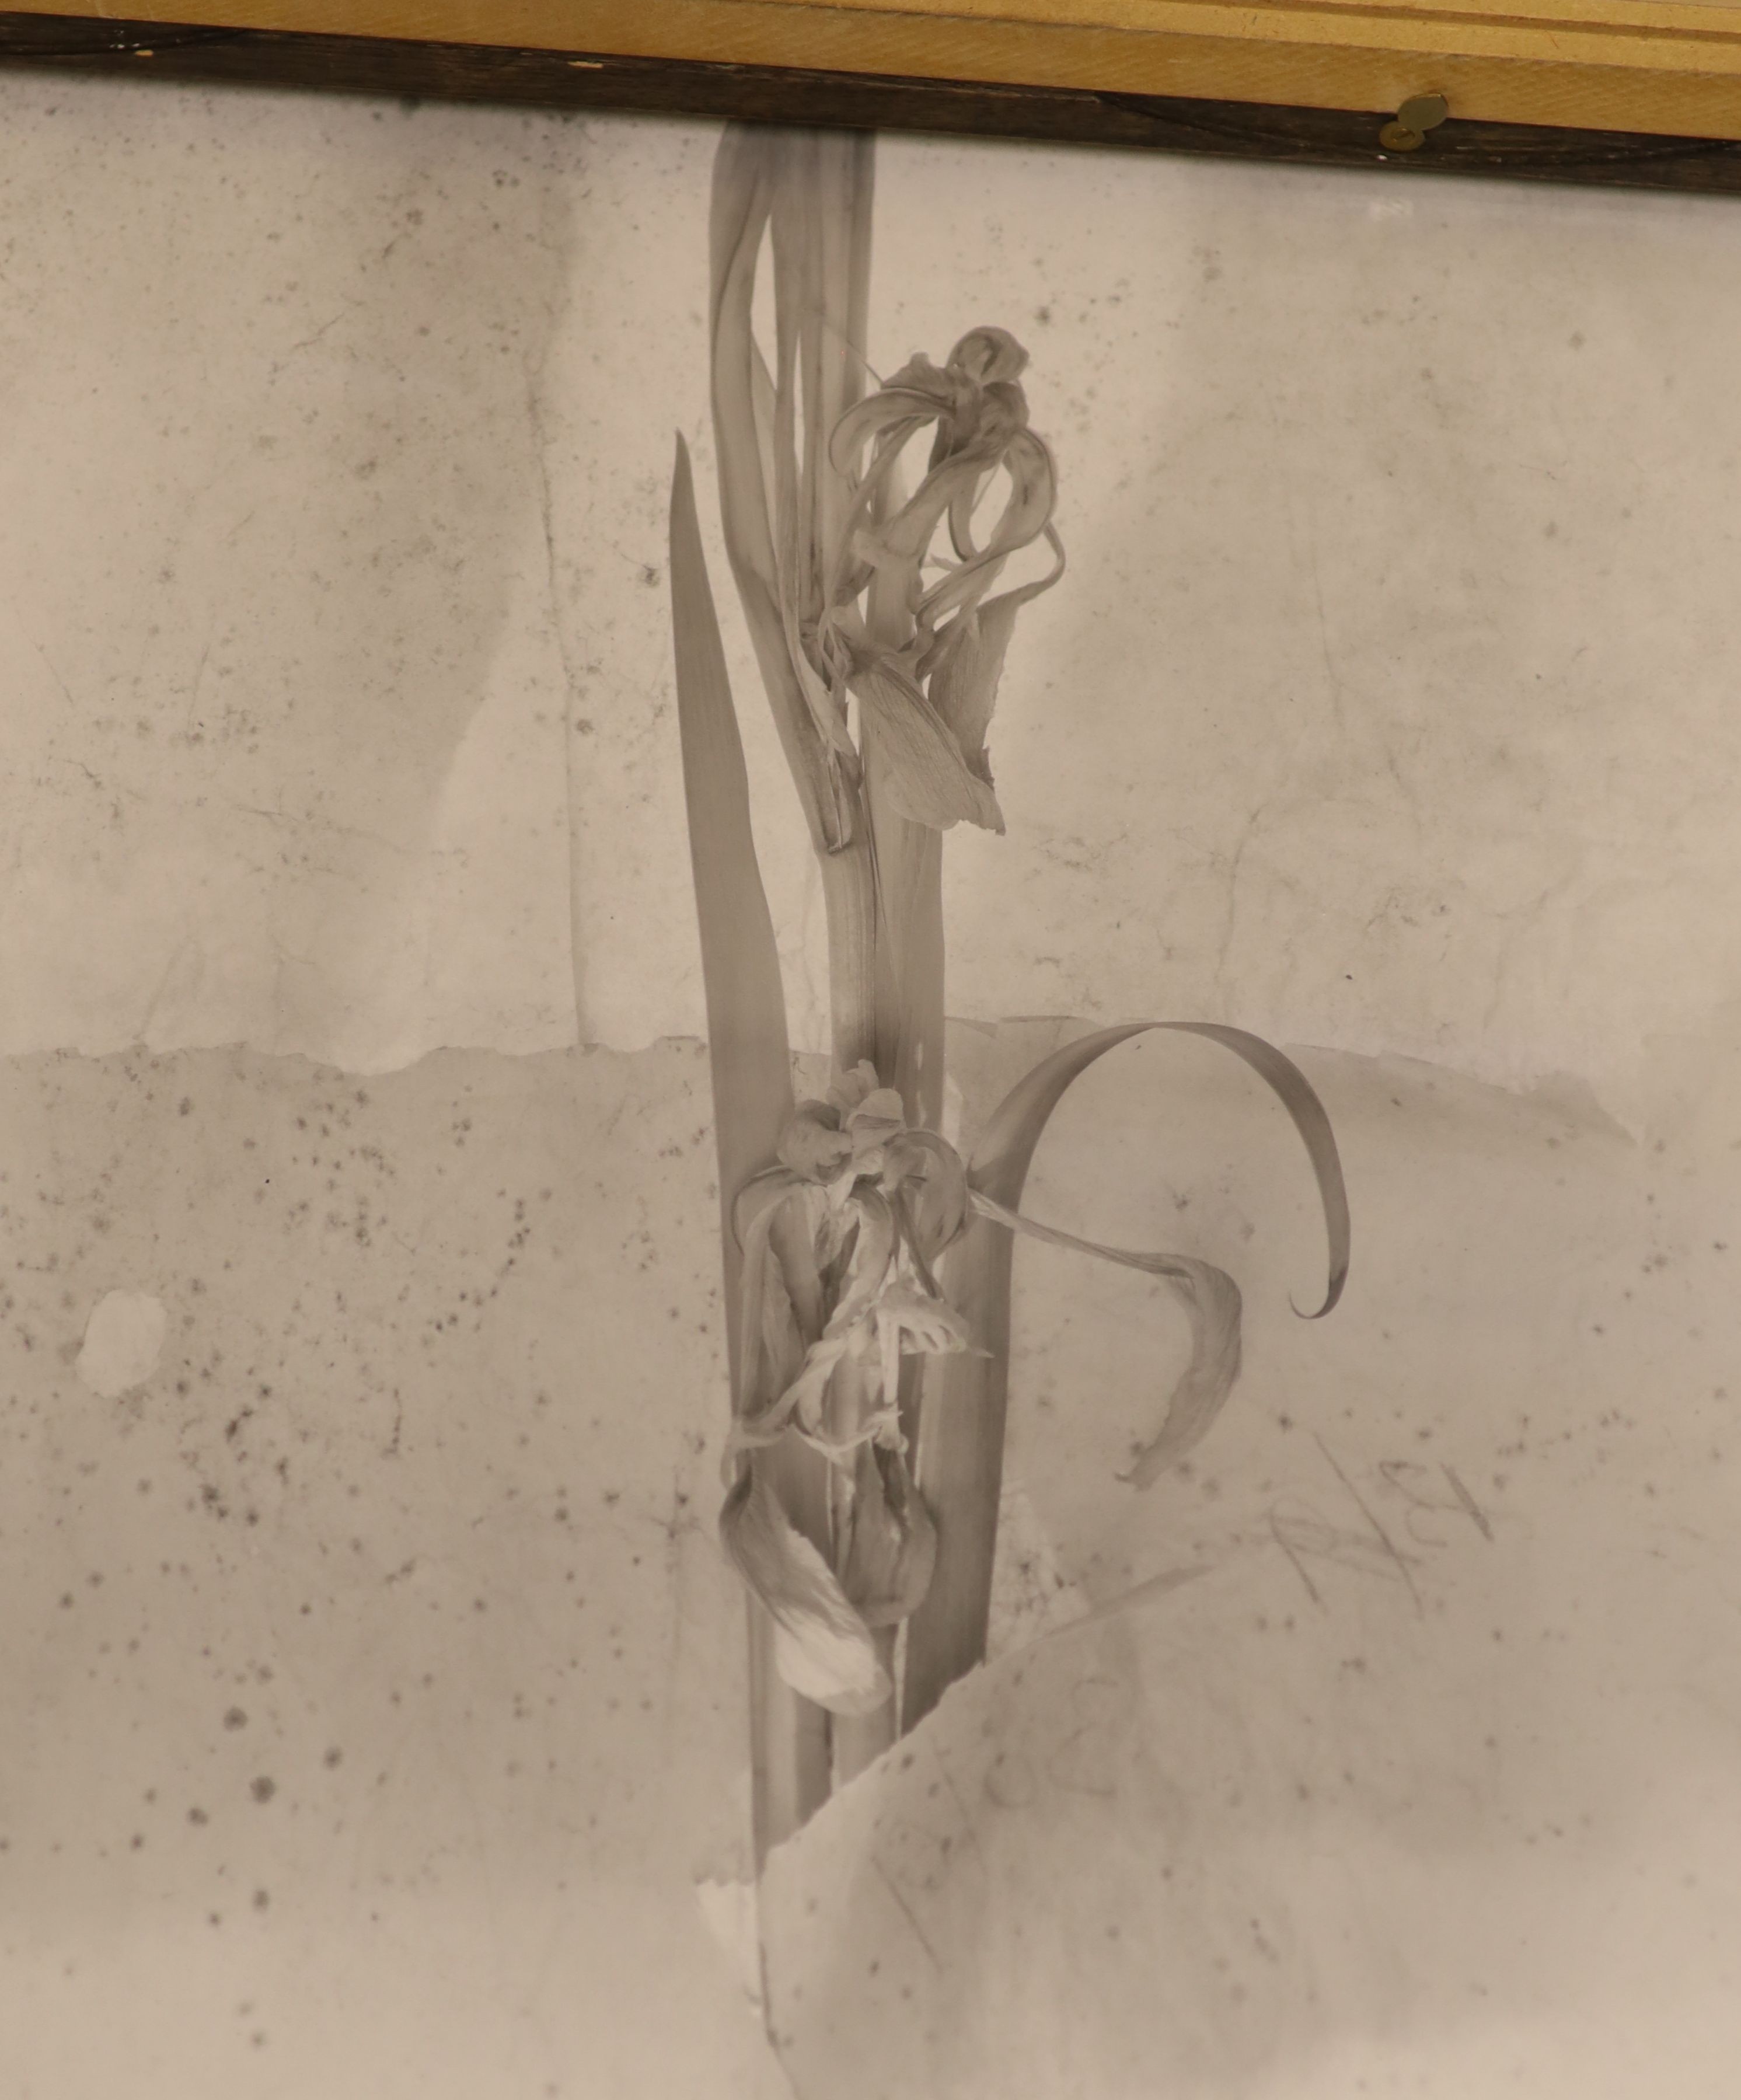 John Blakemore (1936-), eight assorted gelatin silver prints, Tulips 1988 with Zelda Cheatle Gallery label verso, 41 x 33cm; Tulip Series, 41 x 32cm; Tulip Series, two in one frame